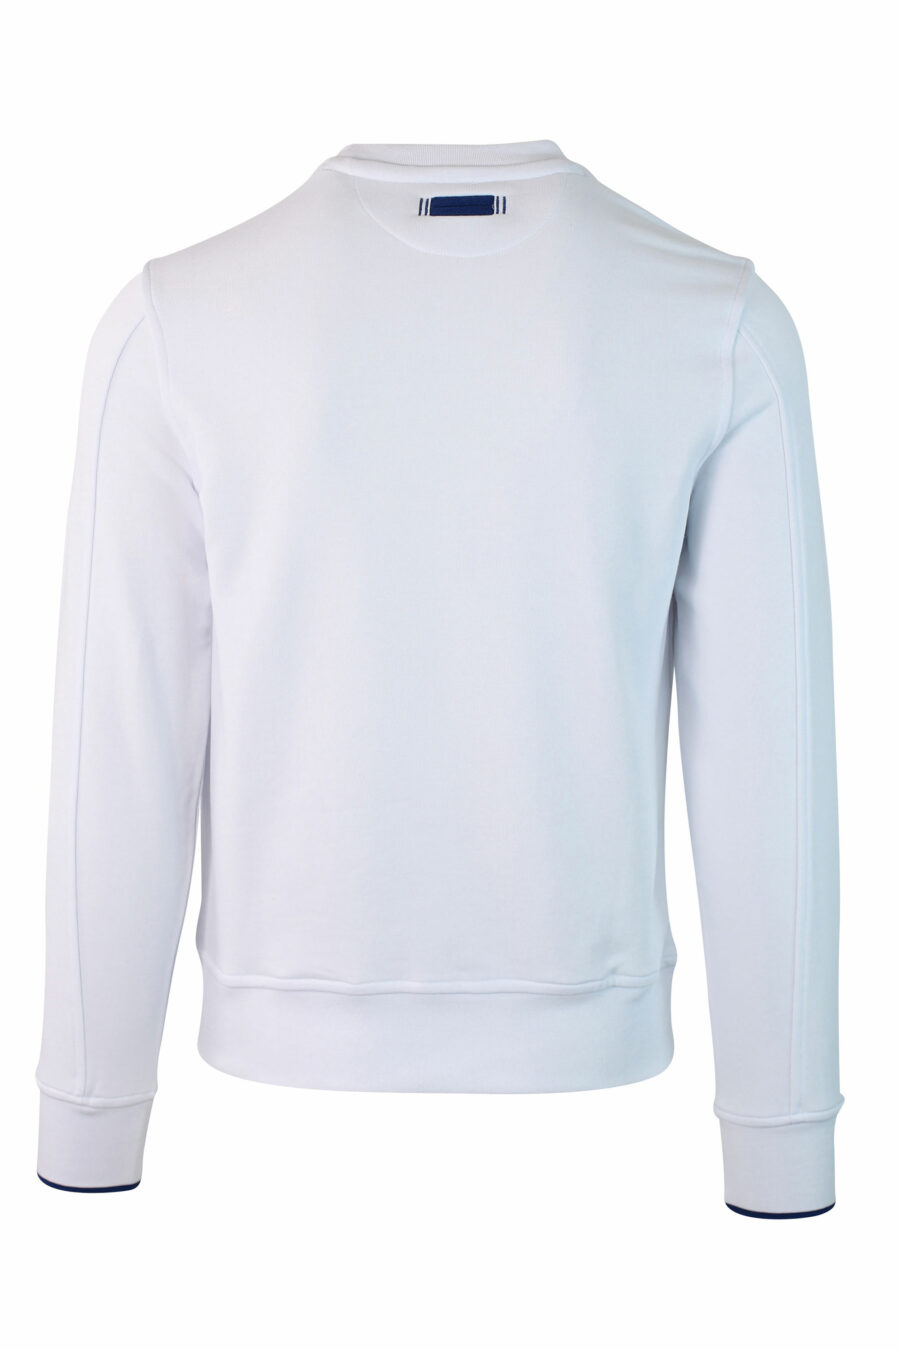 Sweatshirt branca com maxilogue de veludo monocromático - IMG 9844 1